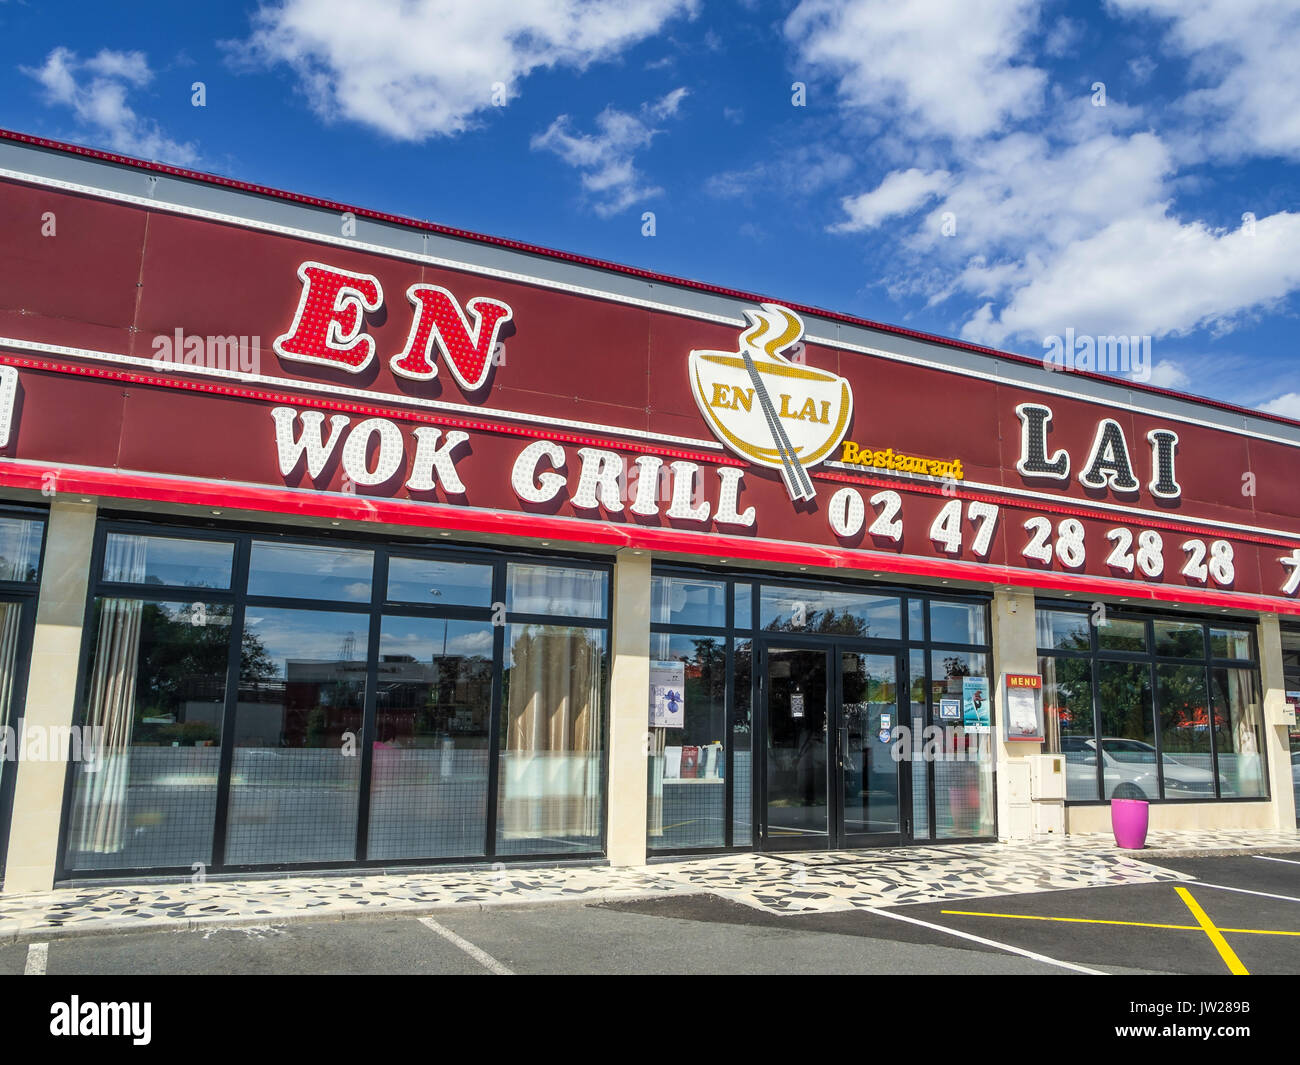 En Lai' Chinese wok grill restaurant self-service, Tours, Indre-et-Loire,  France Photo Stock - Alamy